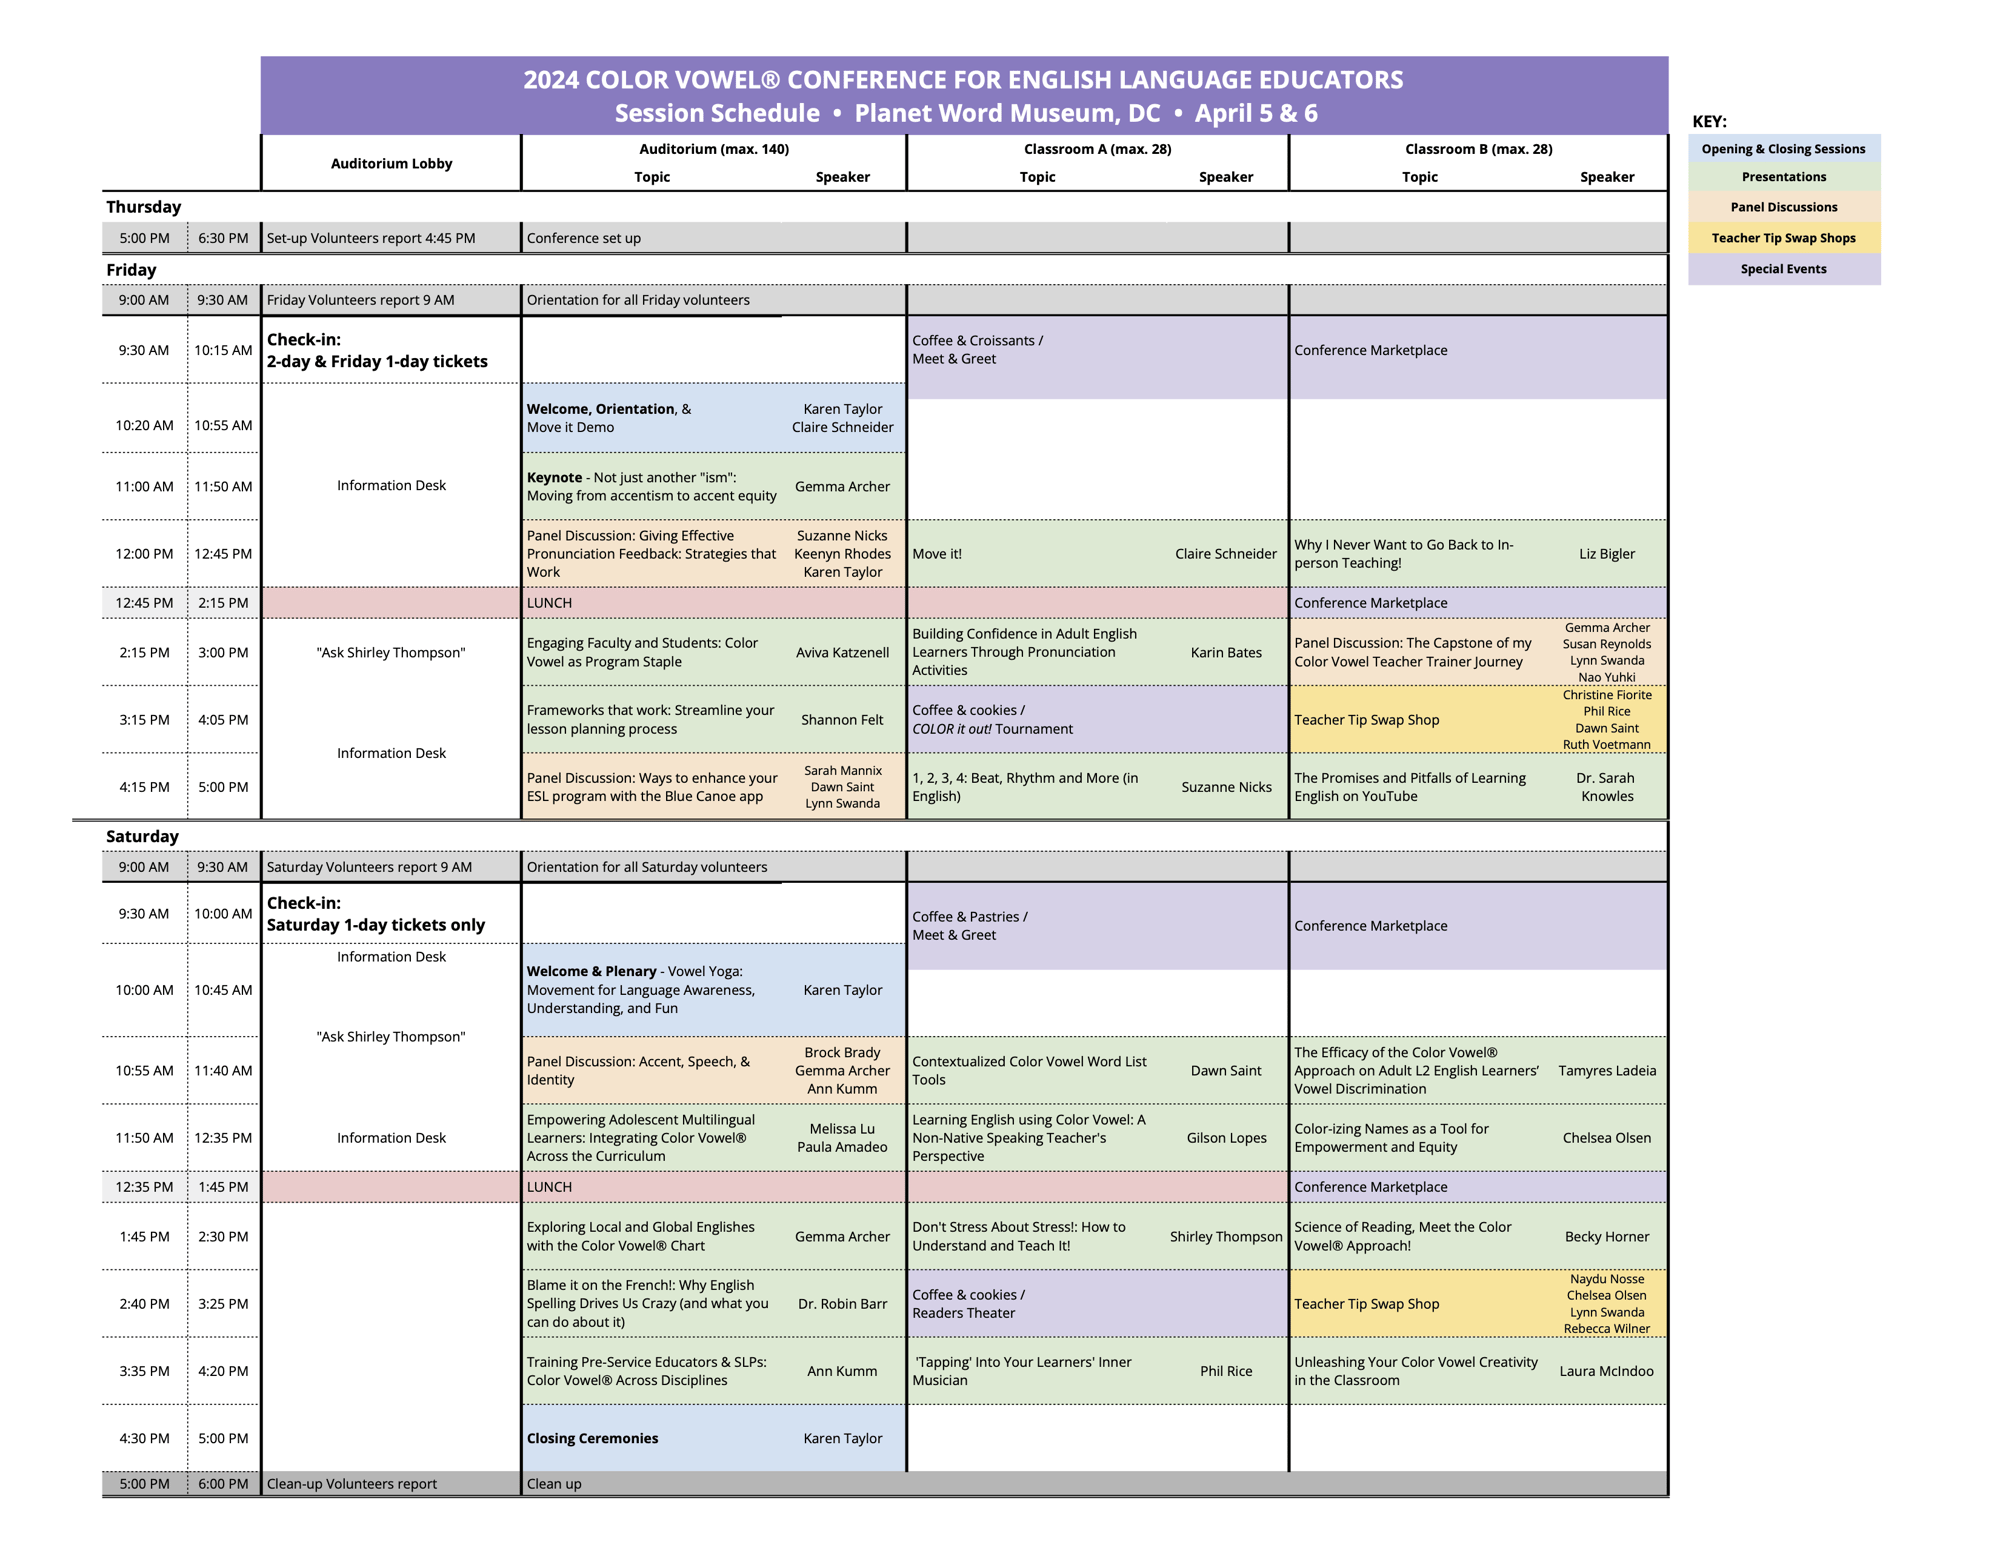 2024 Color Vowel® Conference Schedule - Final